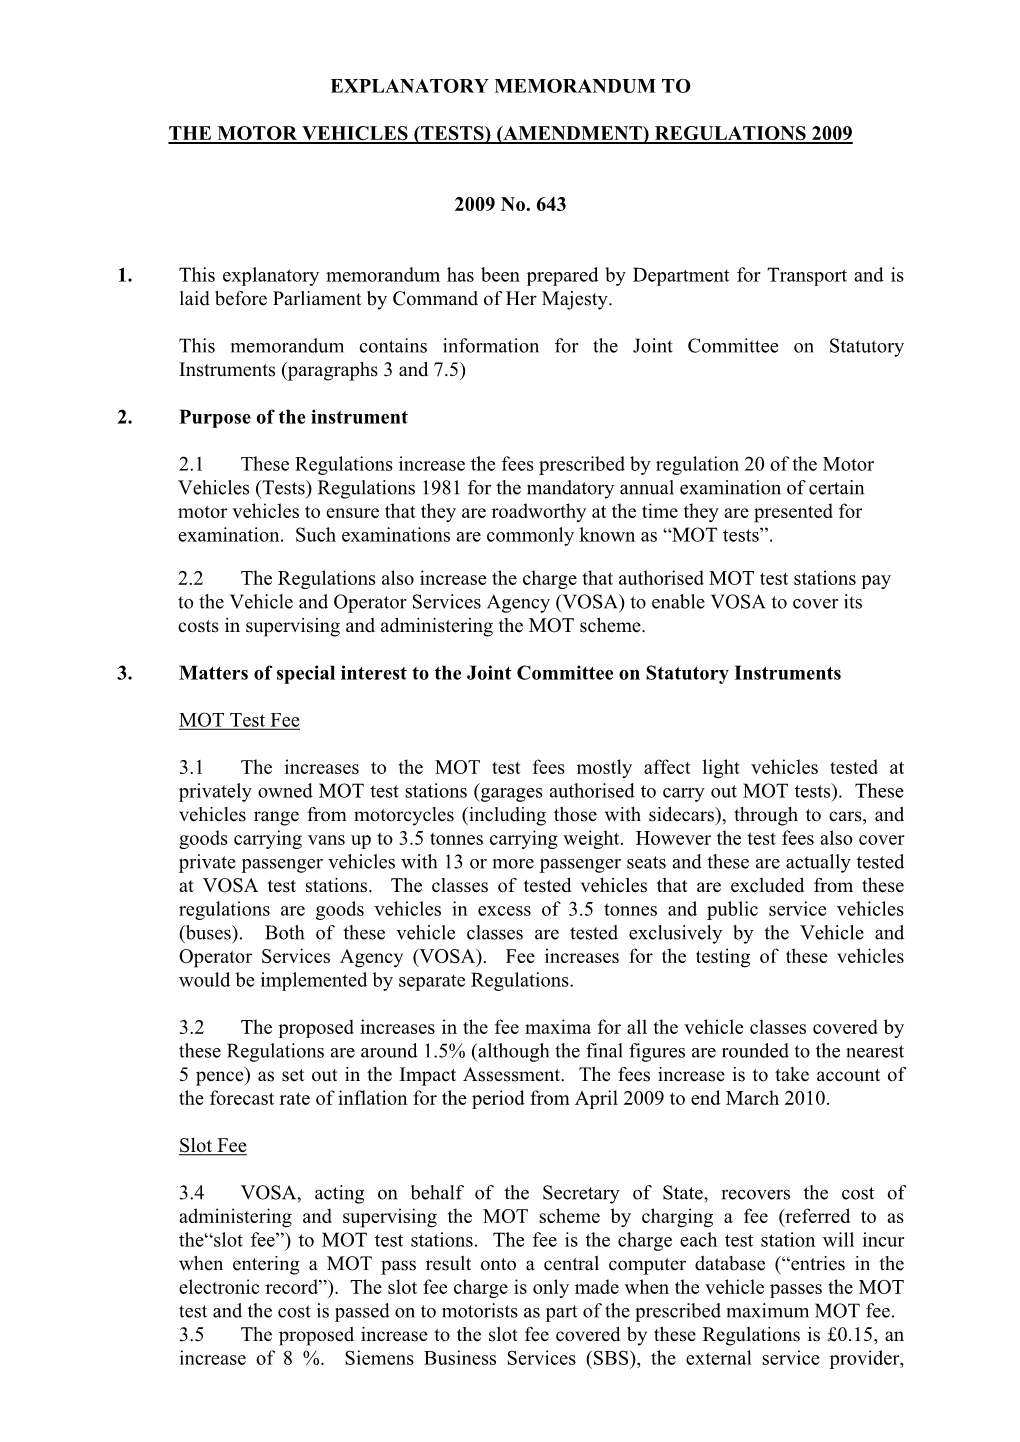 Explanatory Memorandum to the Motor Vehicles (Tests